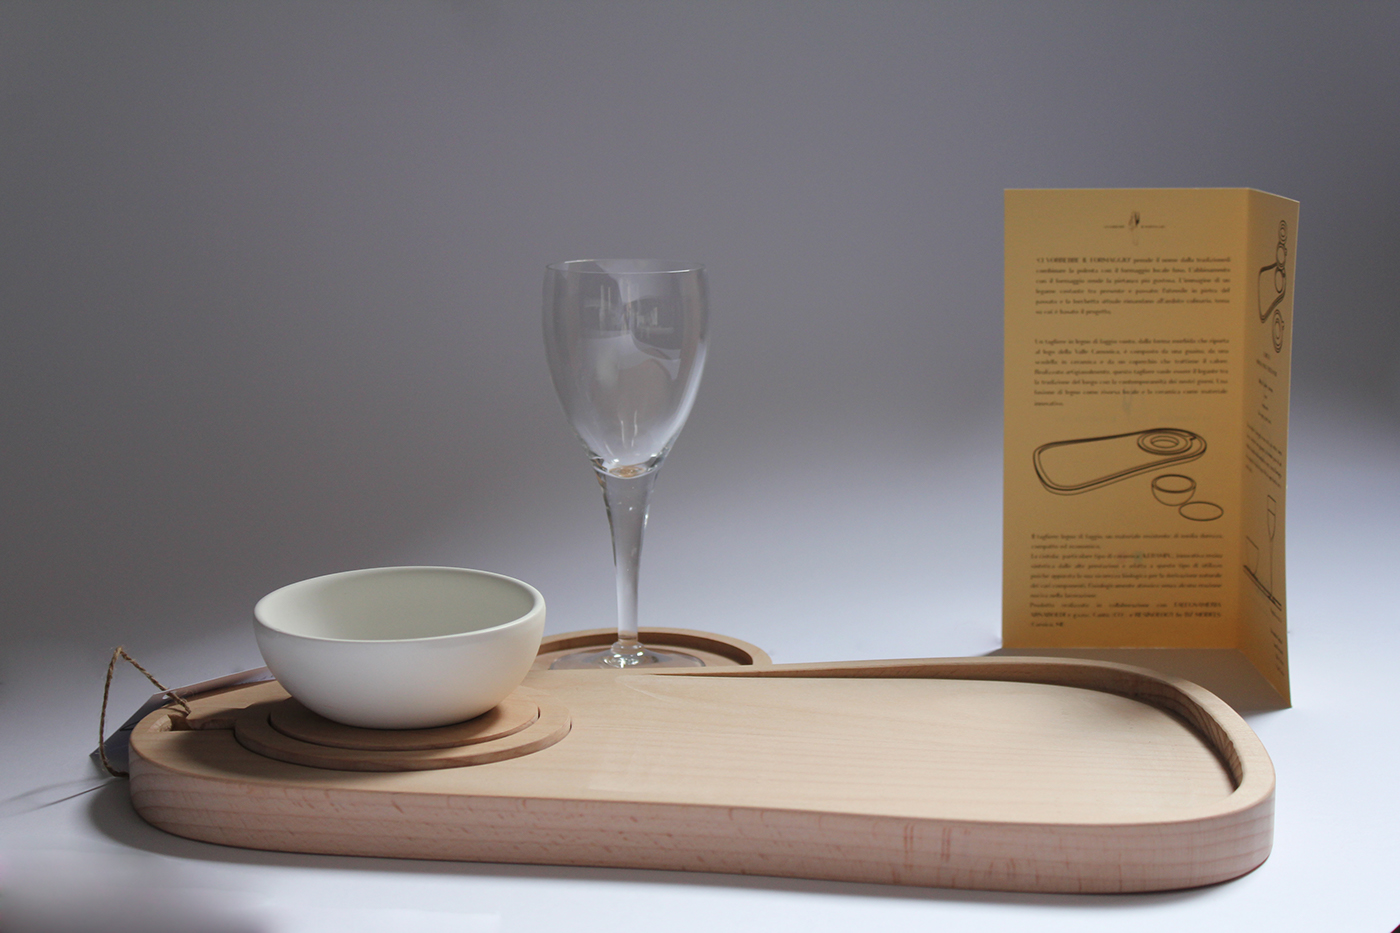 food design handcrafts handmade wood wooden design design cutboard